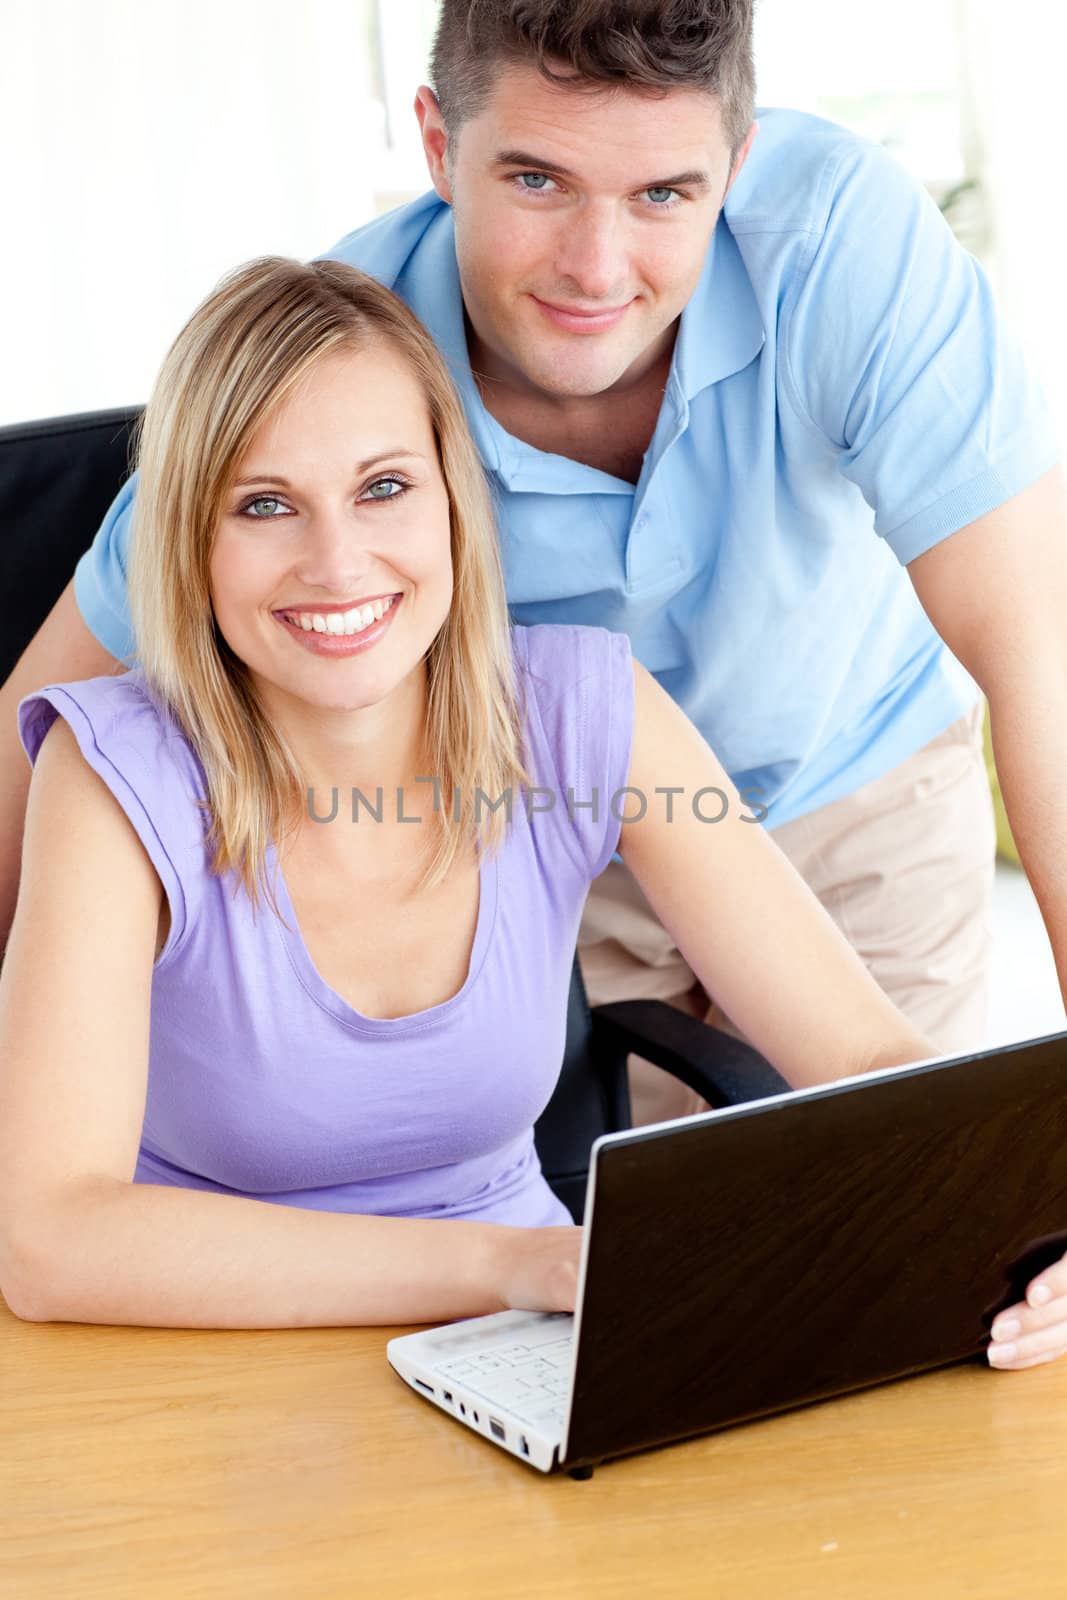 Joyful couple using a laptop sitting in the kitchen by Wavebreakmedia